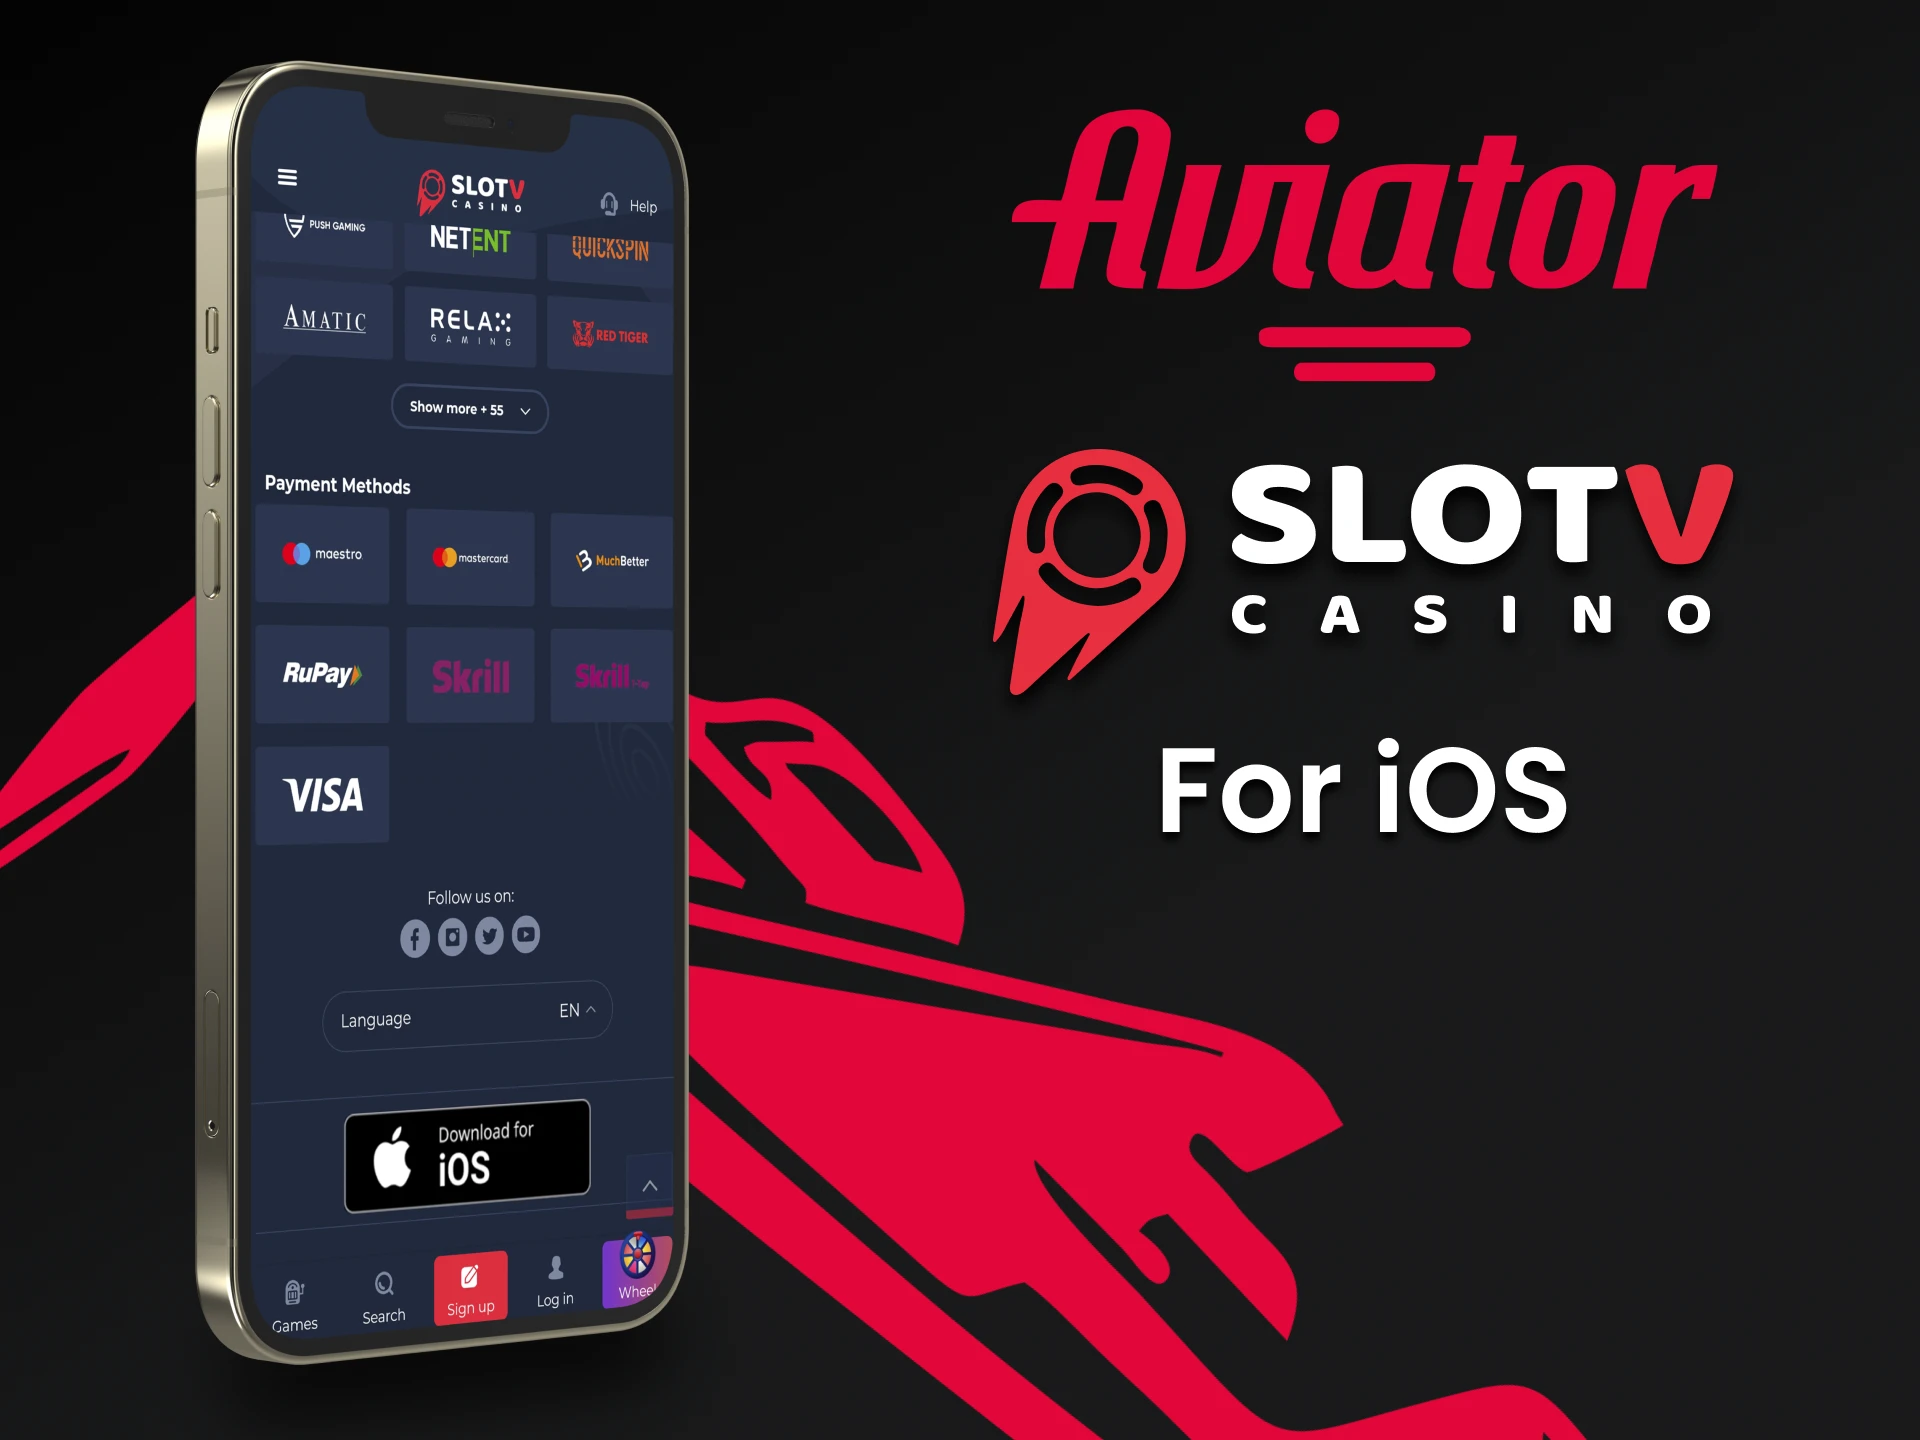 Install SlotV app for iOS to play Aviator.